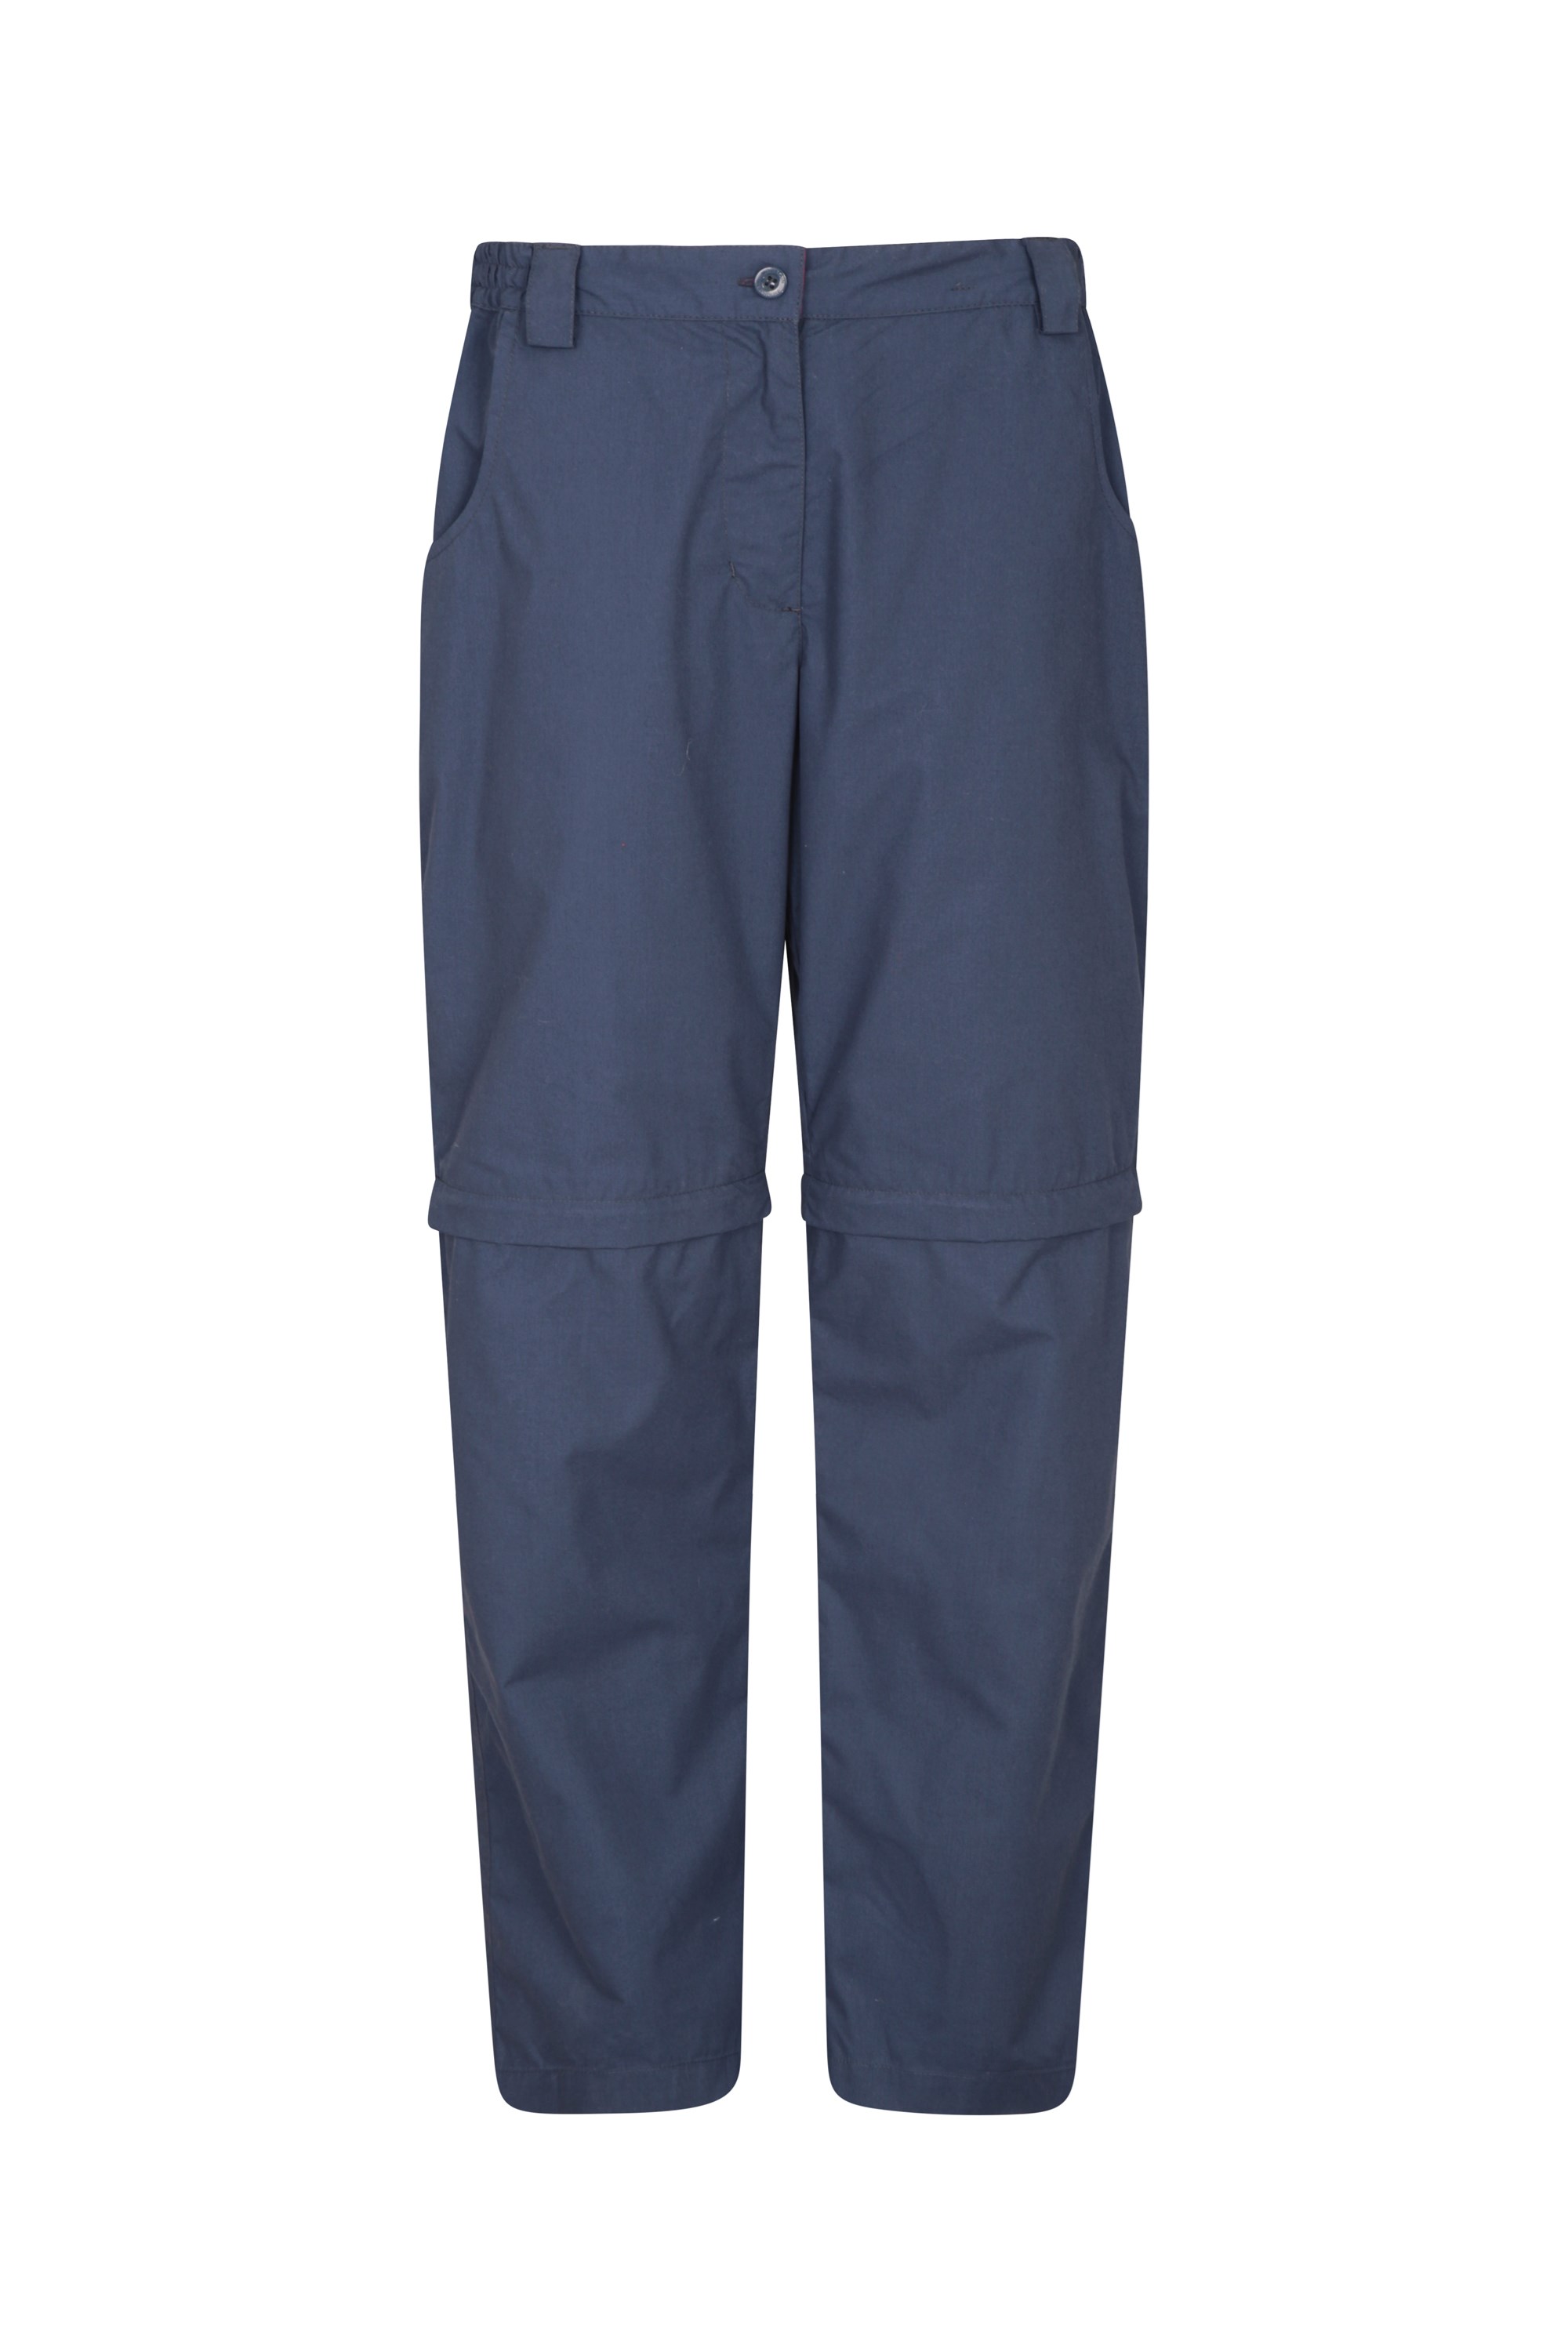 Fjällräven High Coast Trousers Zip-Off - Walking trousers Men's | Product  Review | Bergfreunde.eu